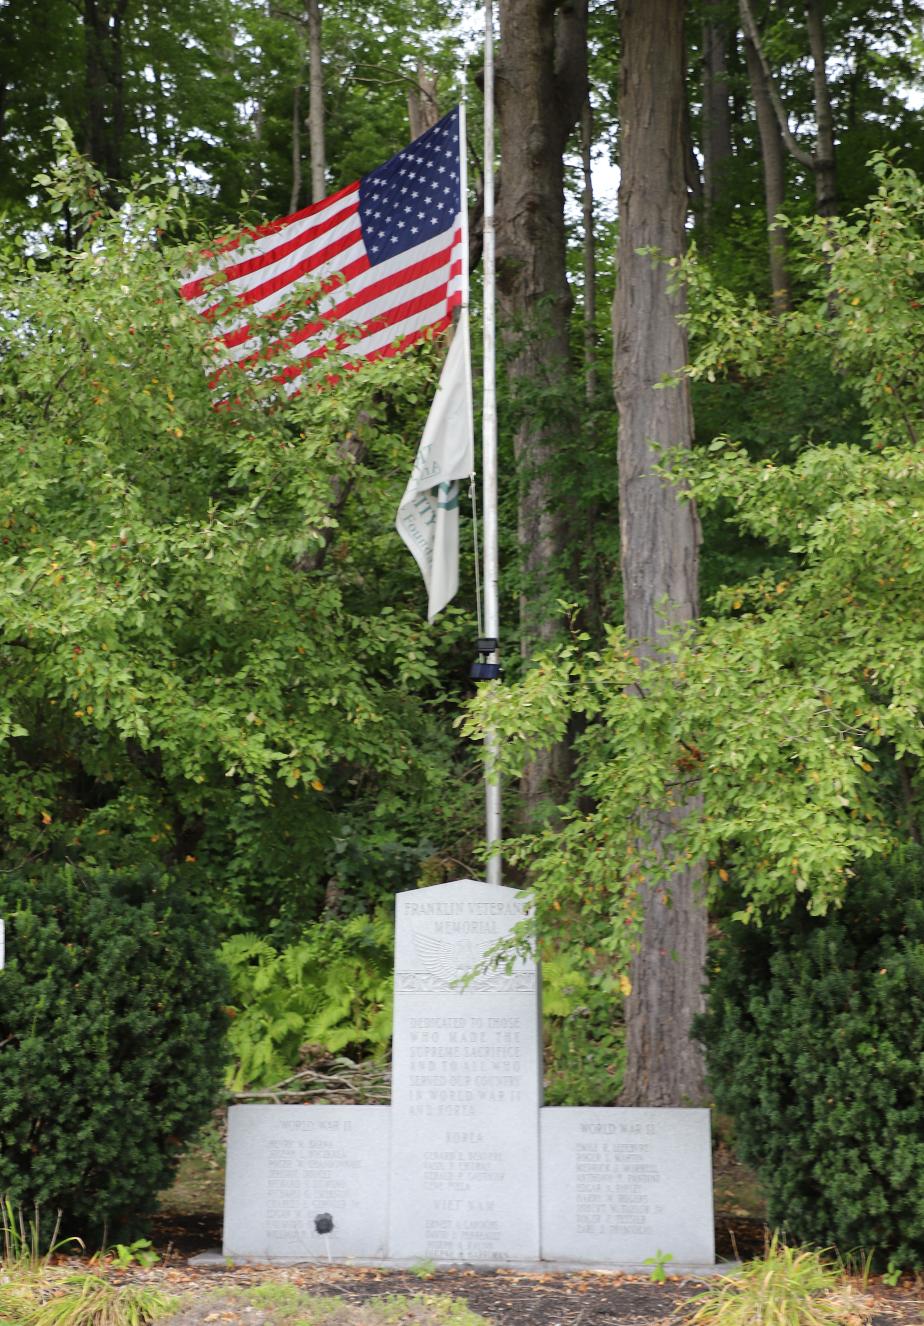 Franklin New Hampshire World War II, Korean War & Vietnam War Veterans Memorial